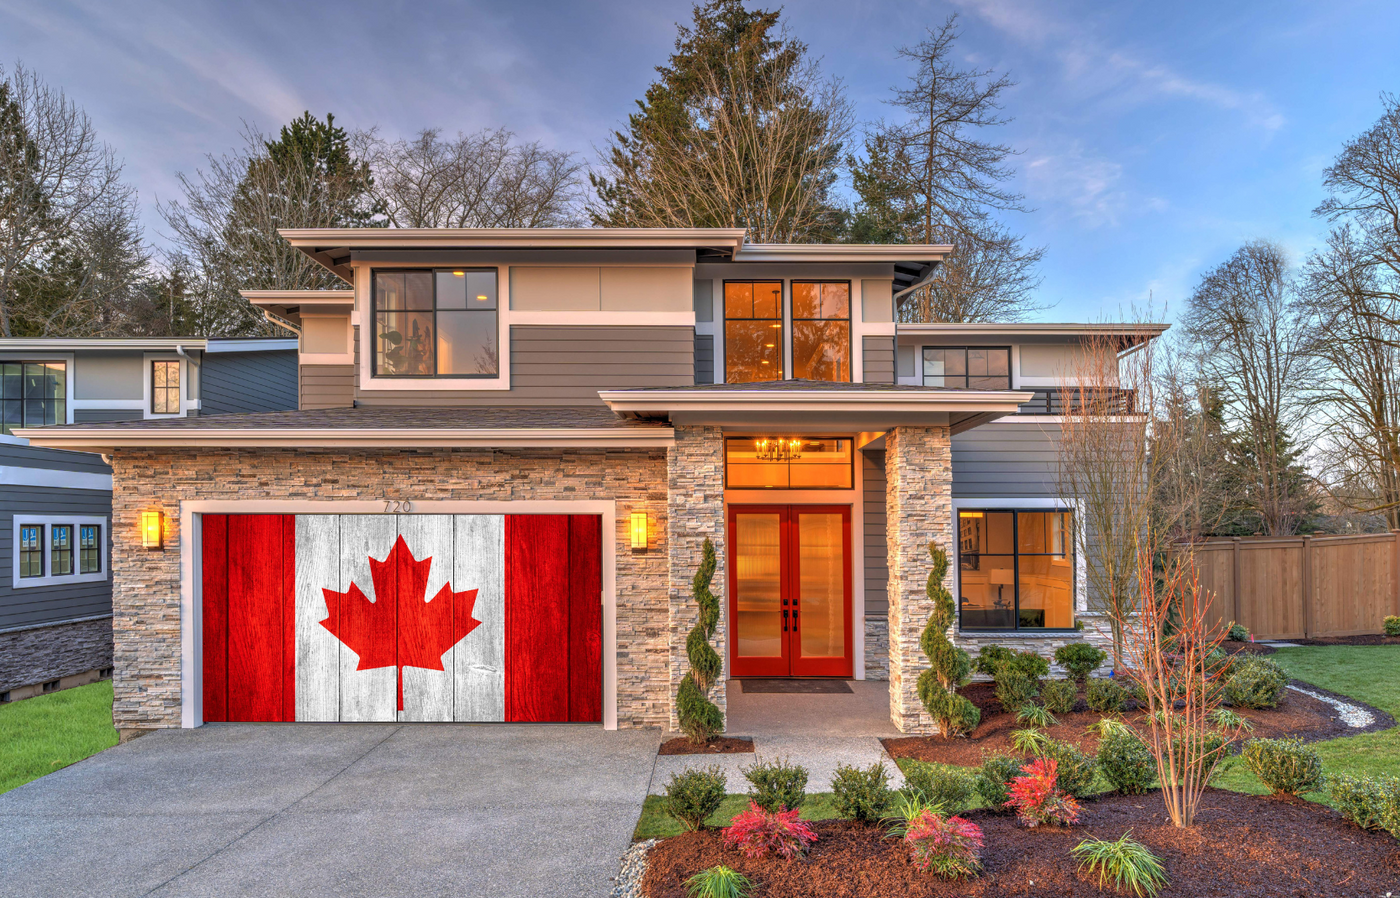 Canada Flag On Wooden Background Garage Door Cover